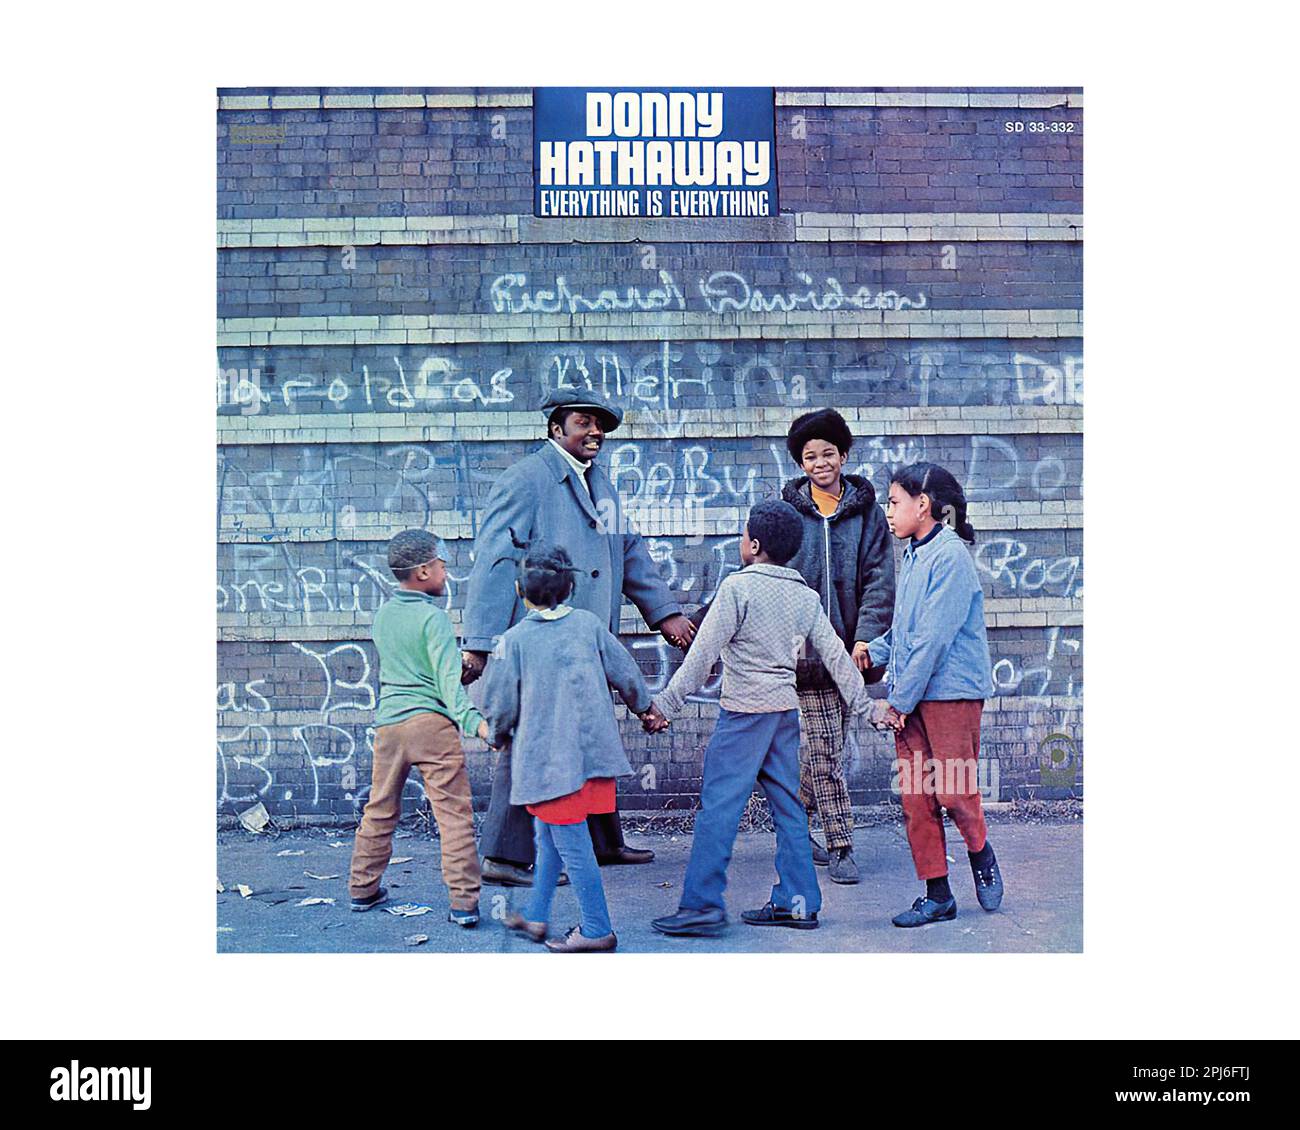 Hathaway Donny 1970 - Vintage U.S. Music Vinyl Record Stock Photo